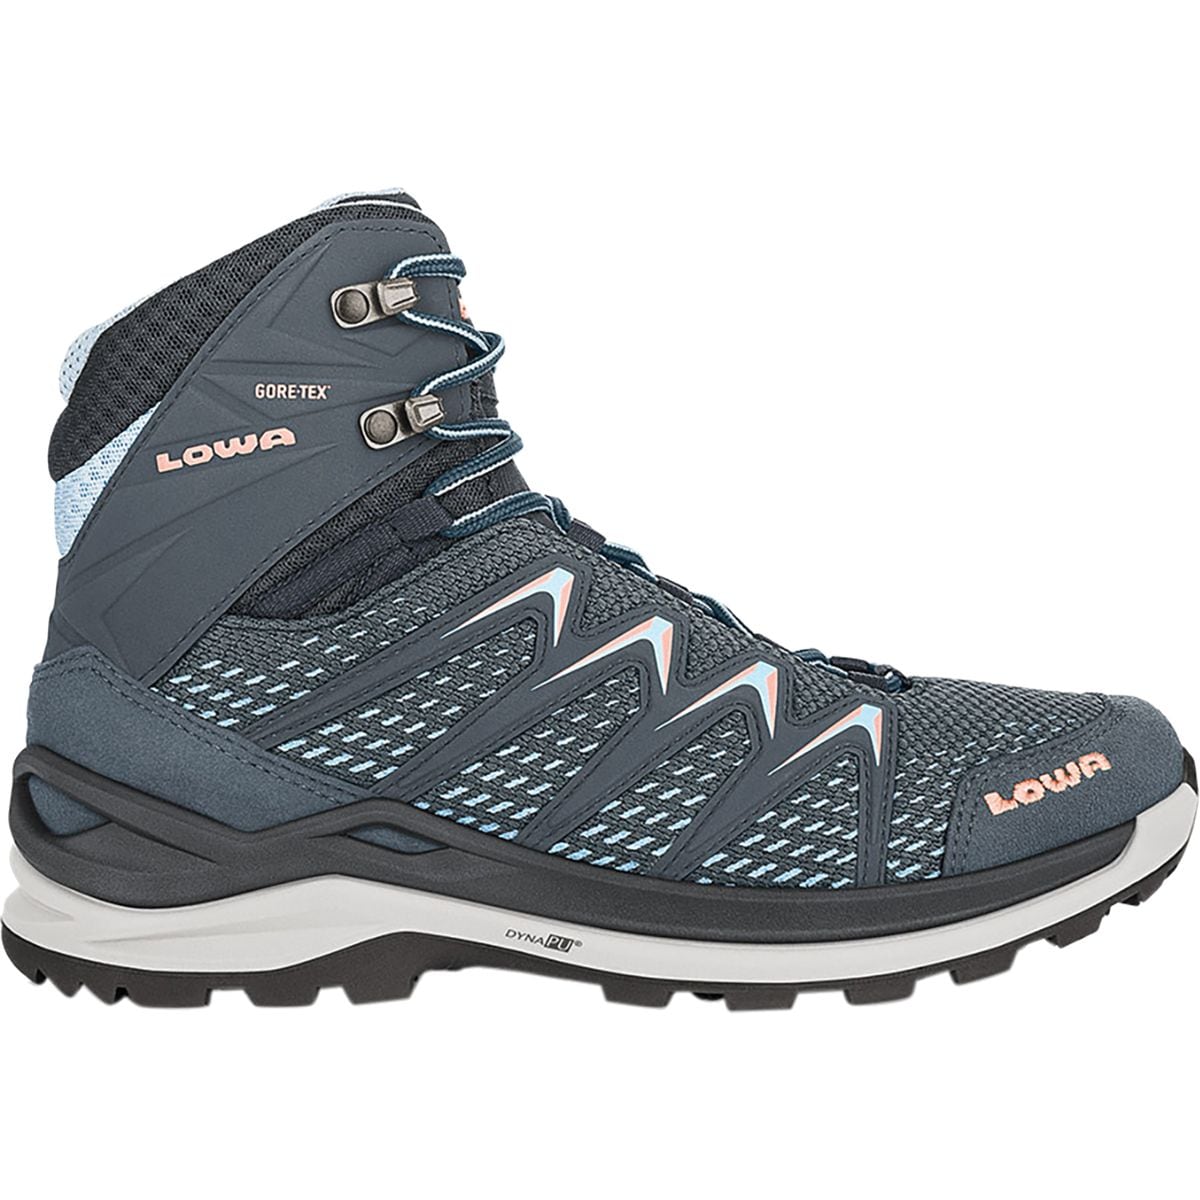 Innox GTX Mid Hiking Boot - Women